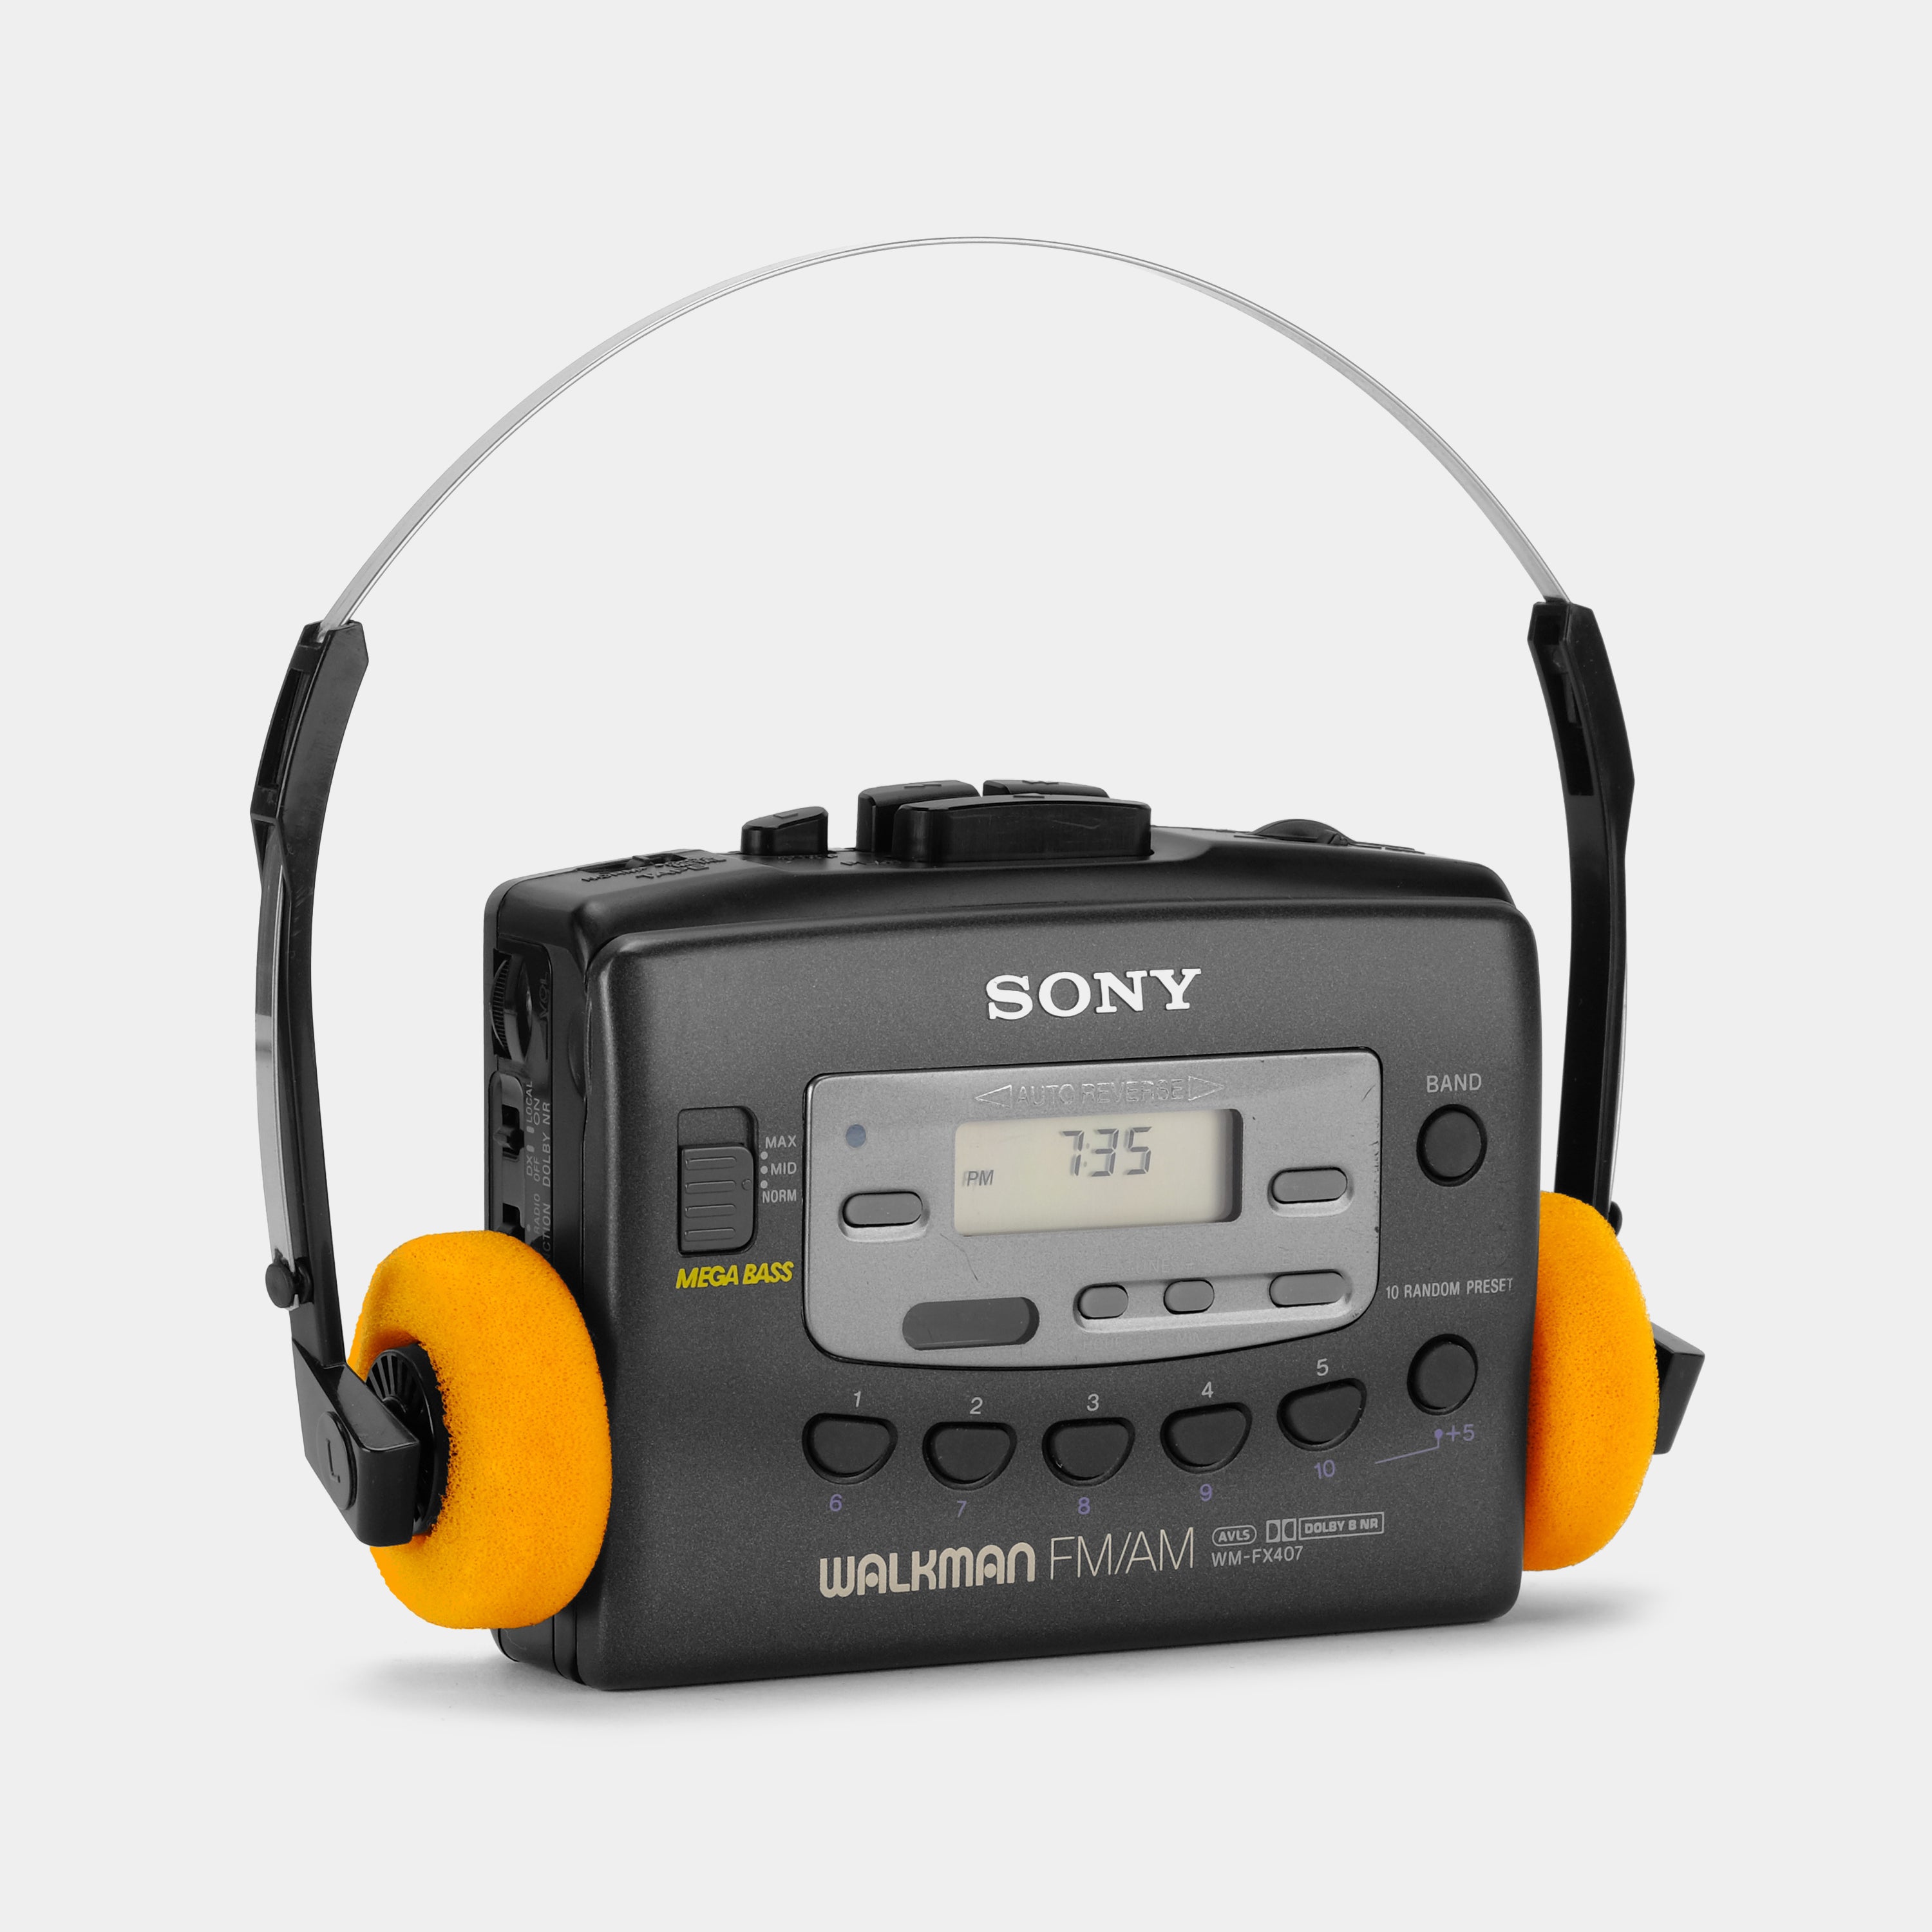 Sony Walkman WM-FX407 Auto Reverse AM/FM Portable Cassette Player